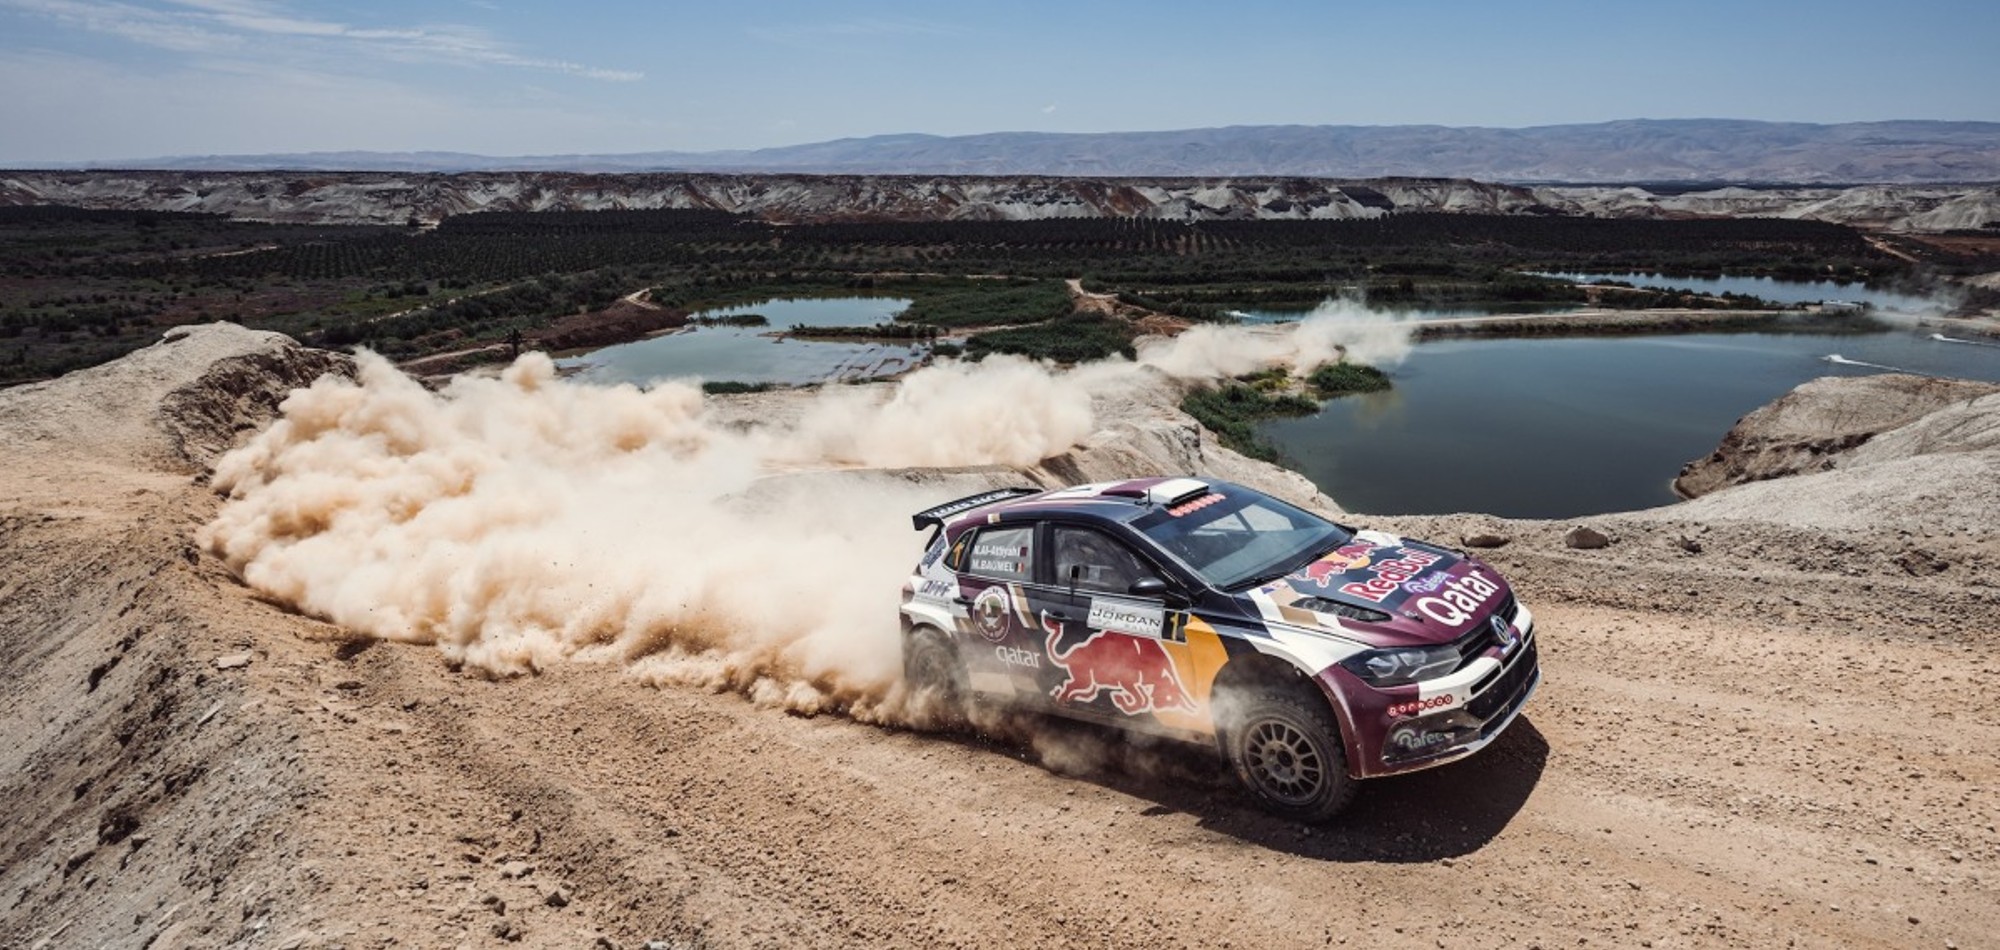 Jordan Rally: Al Attiyah cruises into comfortable lead